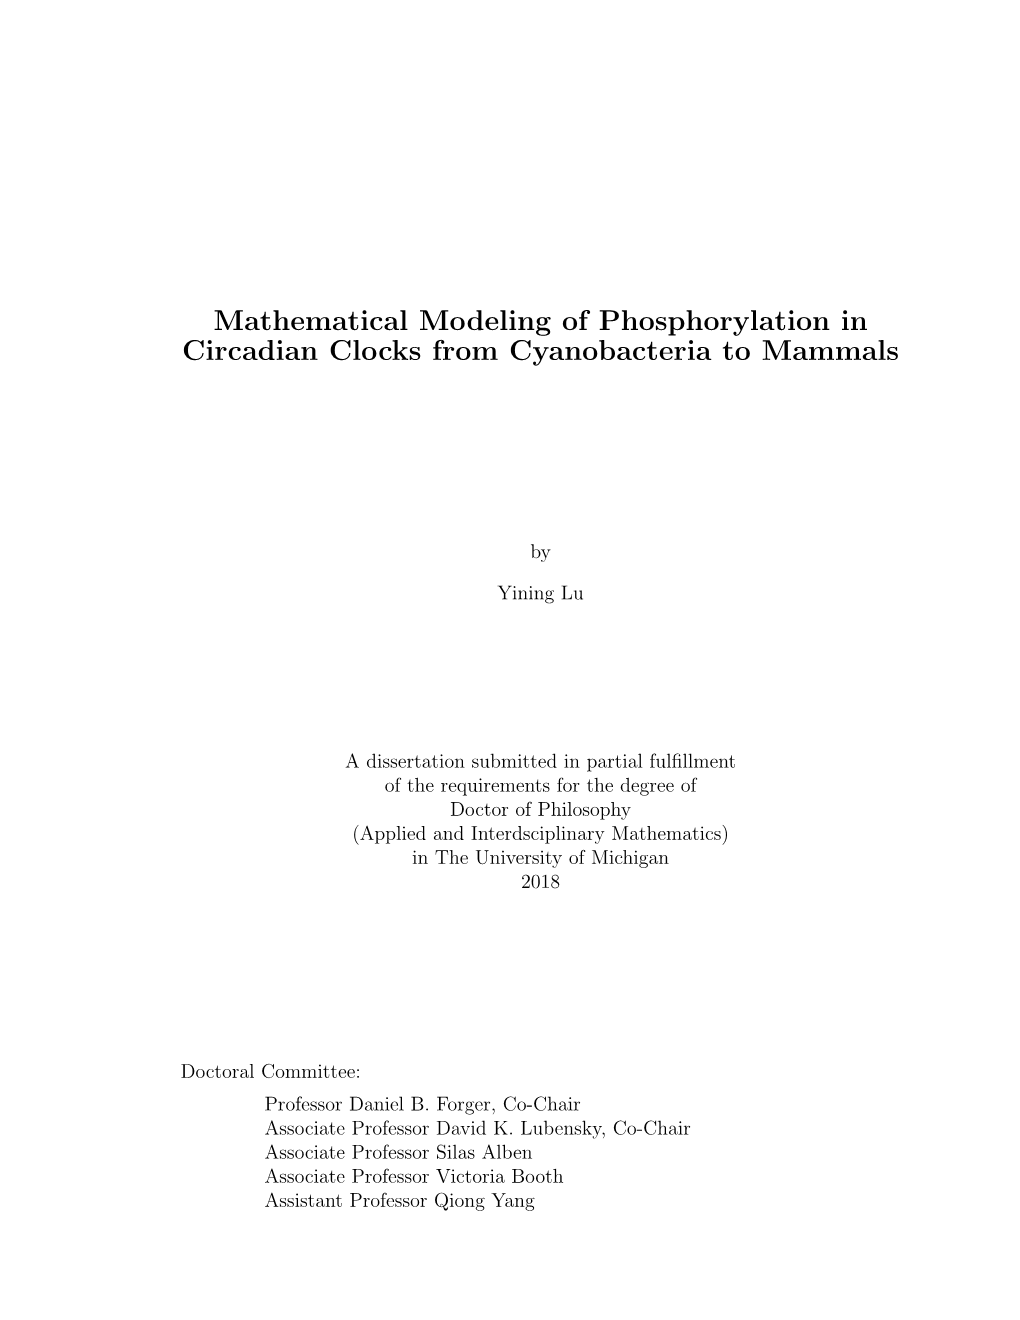 Mathematical Modeling of Phosphorylation in Circadian Clocks from Cyanobacteria to Mammals